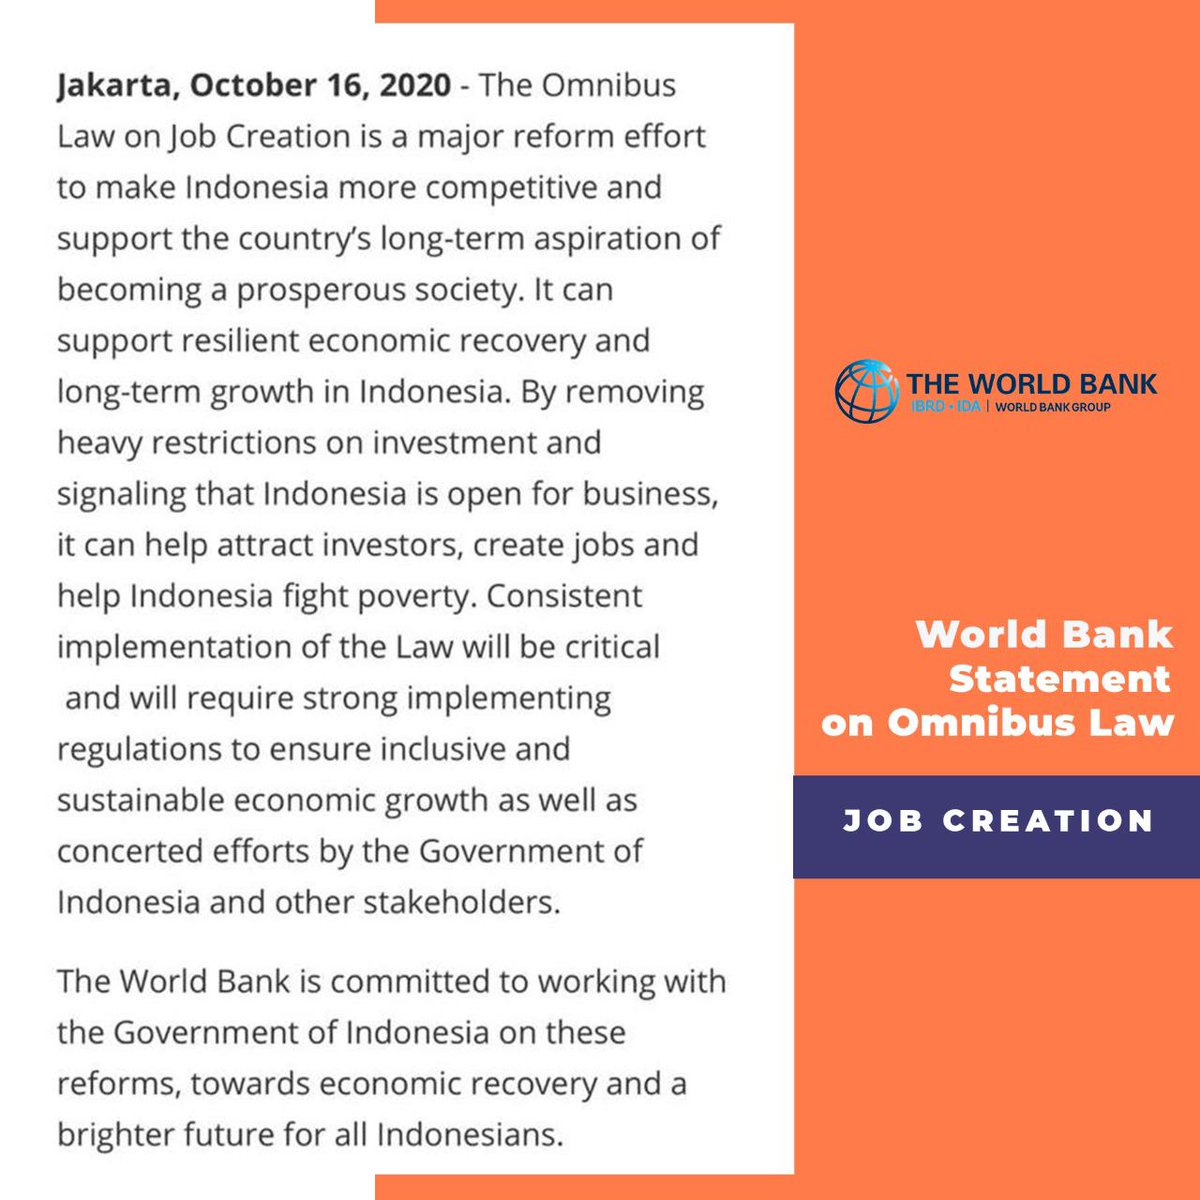 'Undang-Undang Cipta Kerja adalah upaya reformasi besar untuk menjadikan Indonesia lebih kompetitif.' Ini kata Bank Dunia. Berikut pernyataan lengkapnya.